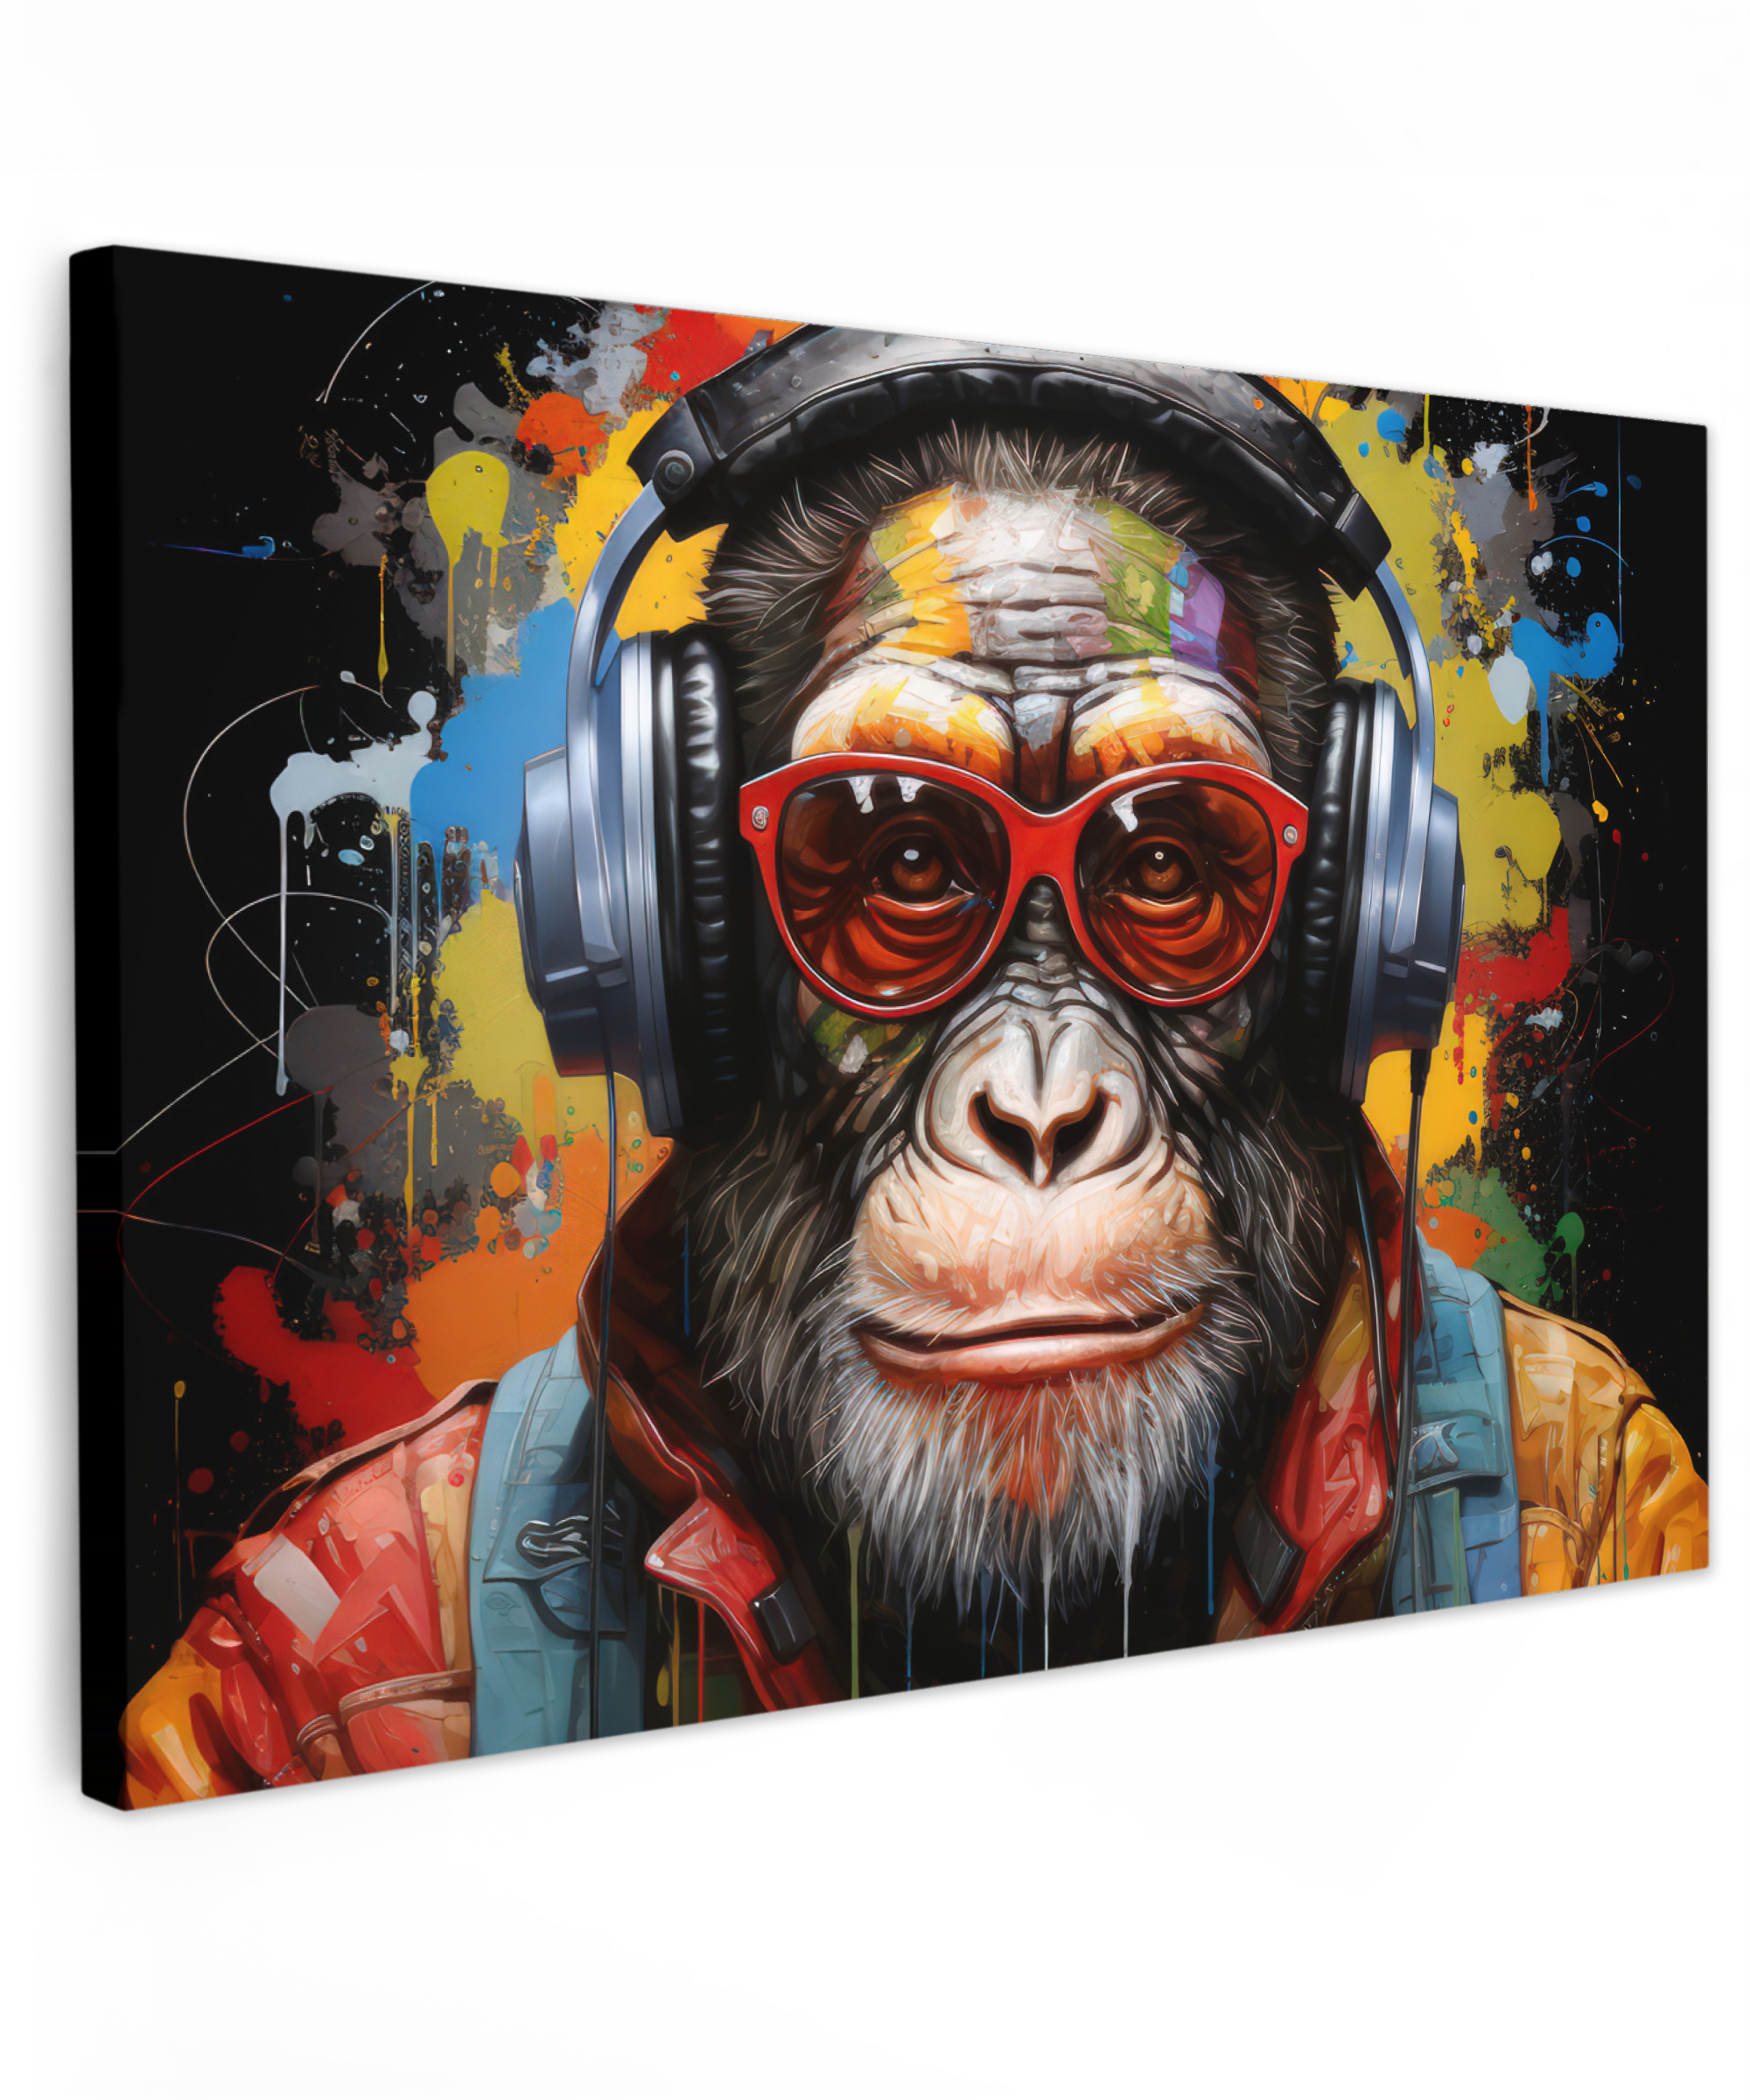 Leinwandbild - Schimpanse - Affe - Tiere - Graffiti - Brille - Kopfhörer - Bunt